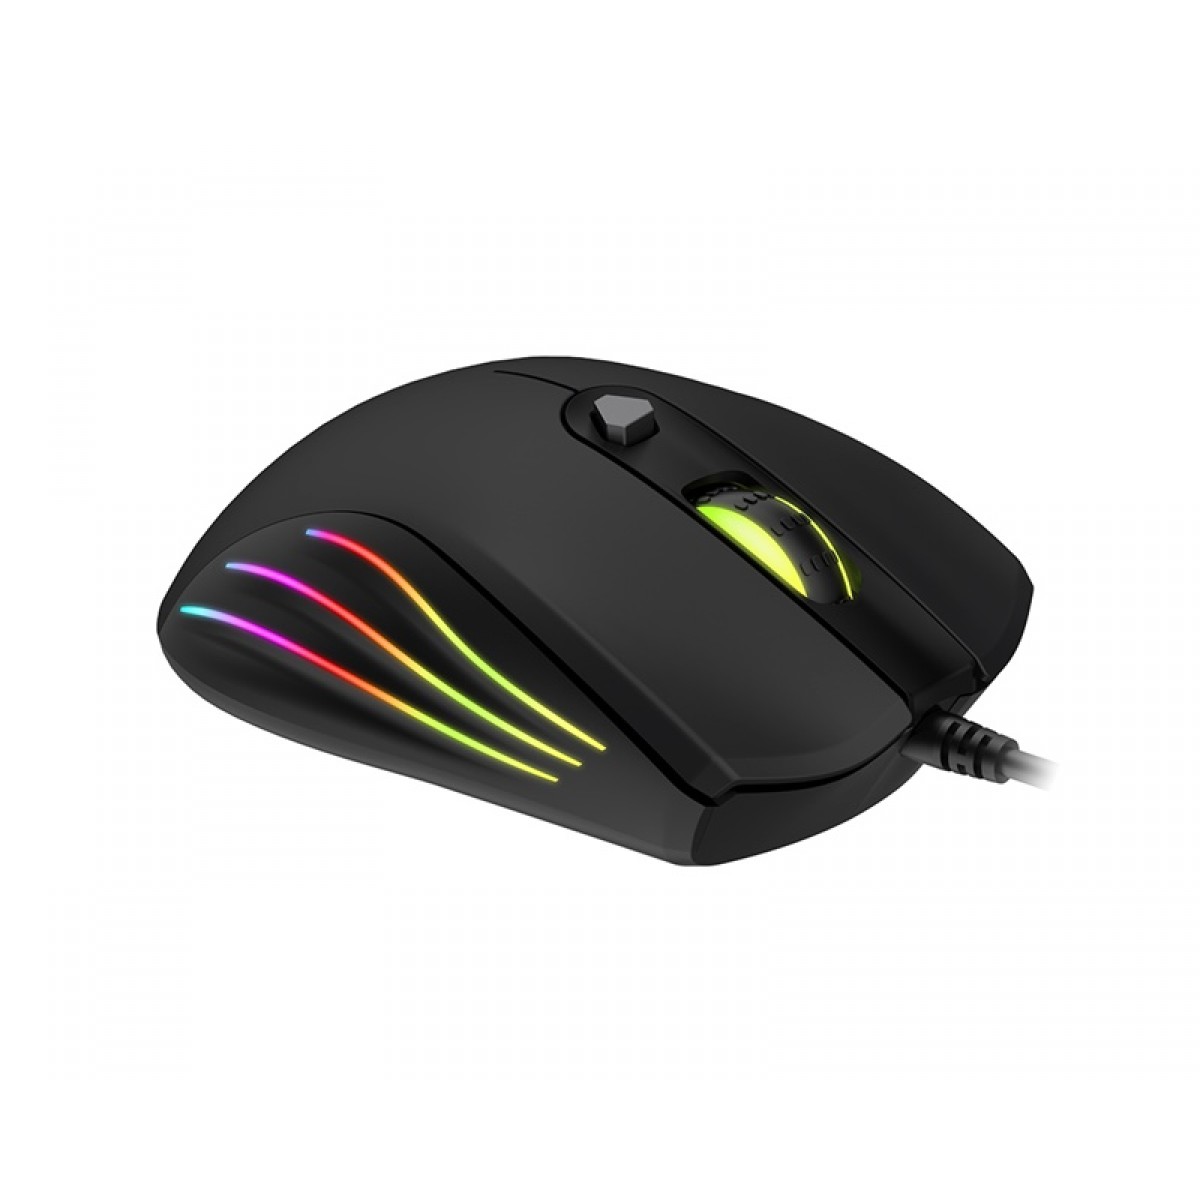 Mouse Gamer SuperFrame, BIG BOSS, 12000 DPI, RGB, 7 Botões, Black, Sensor Pixart 3360